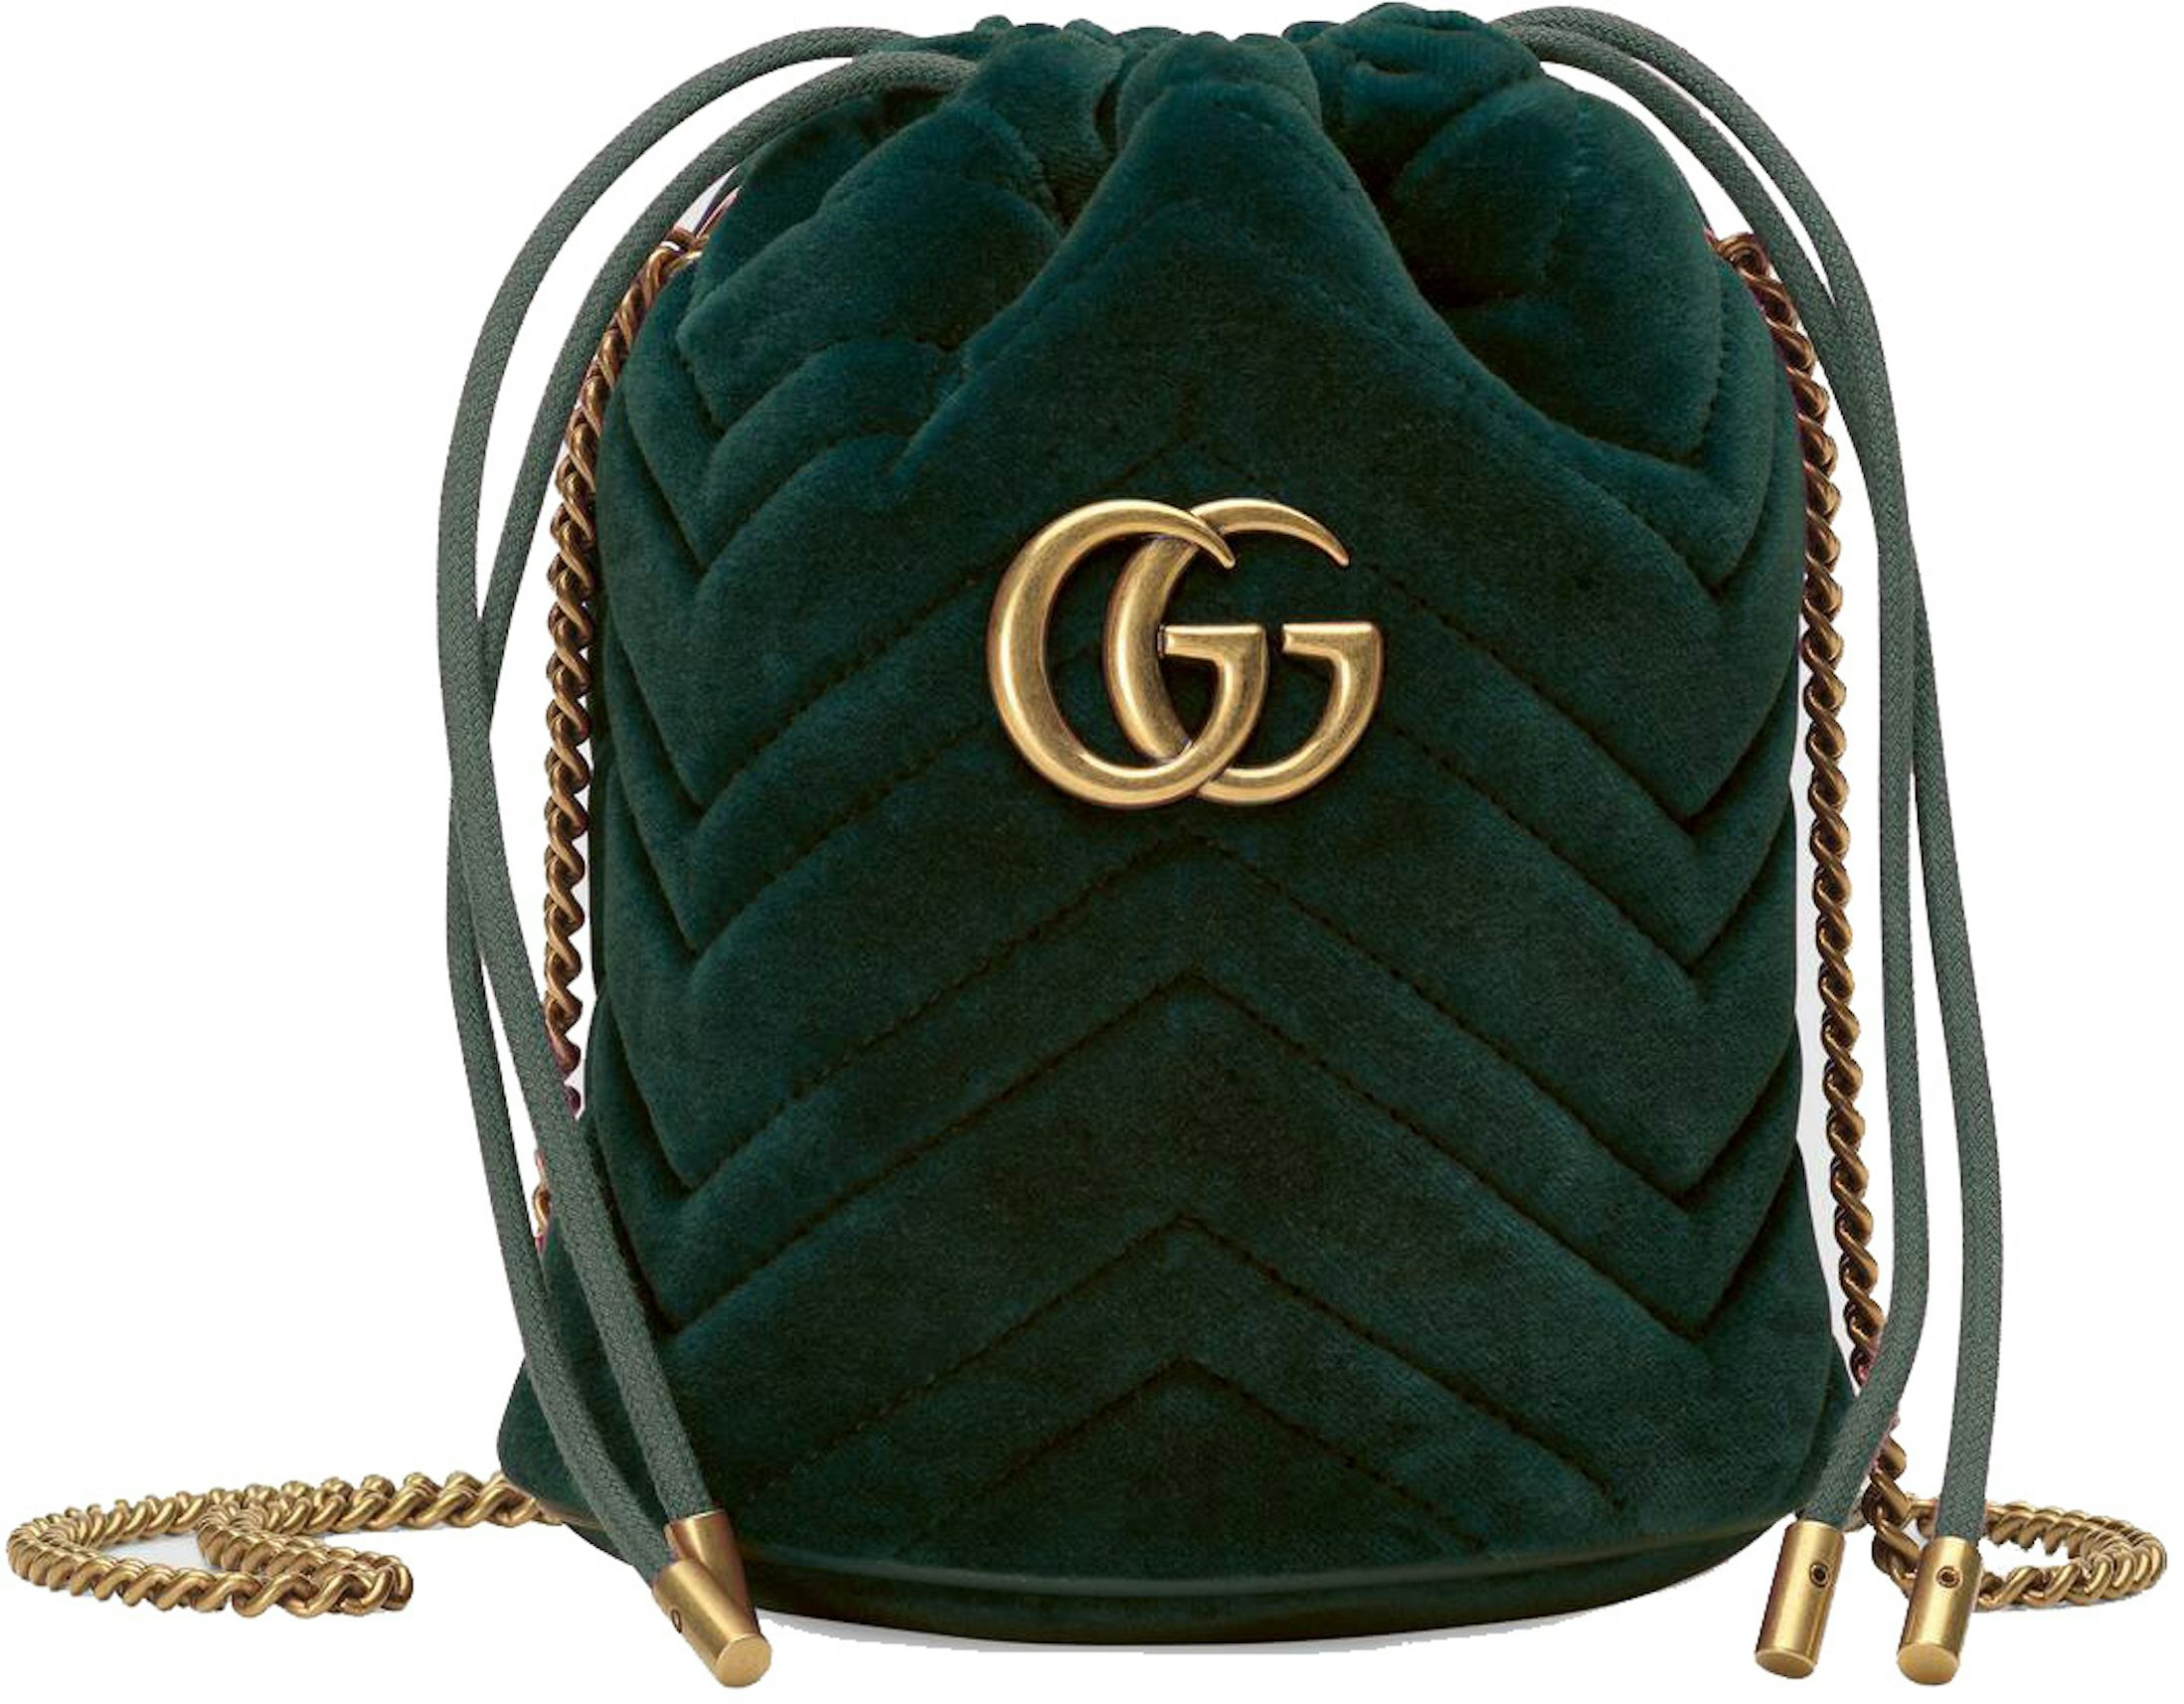 Gucci GG Marmont Velvet Supermini Bag in Black